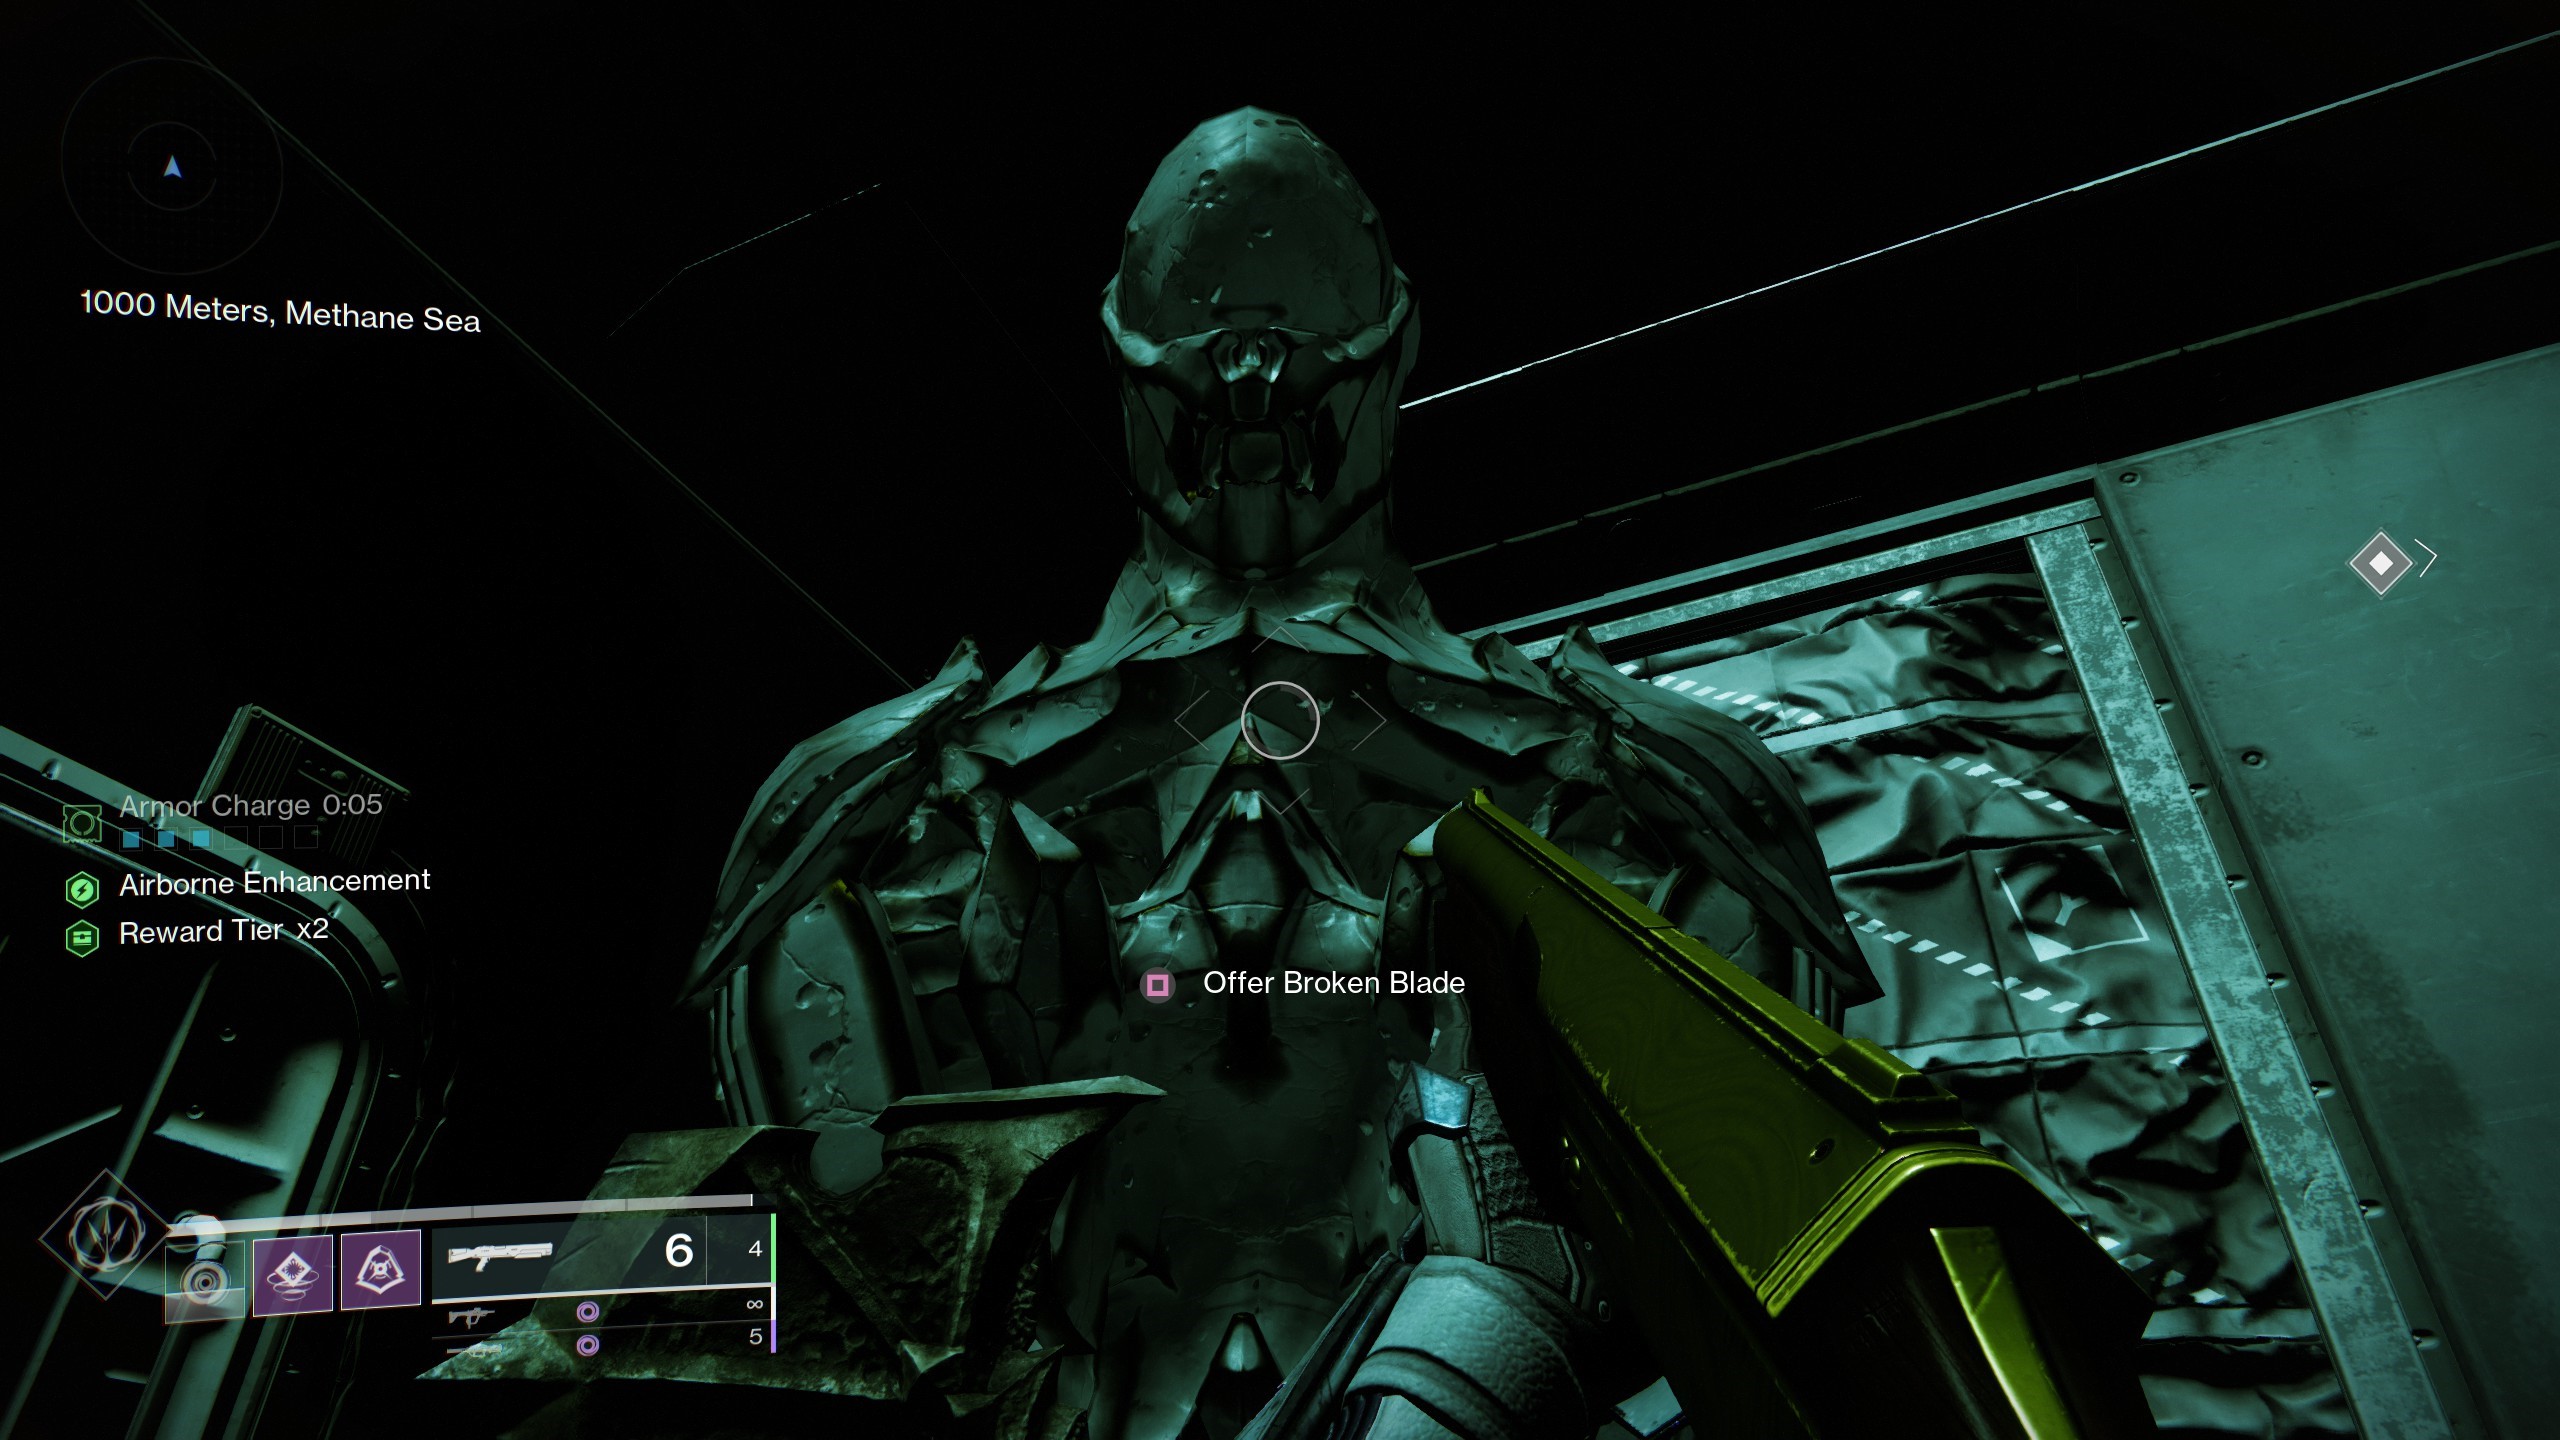 Destiny 2 Broken Blade statue in first encounter